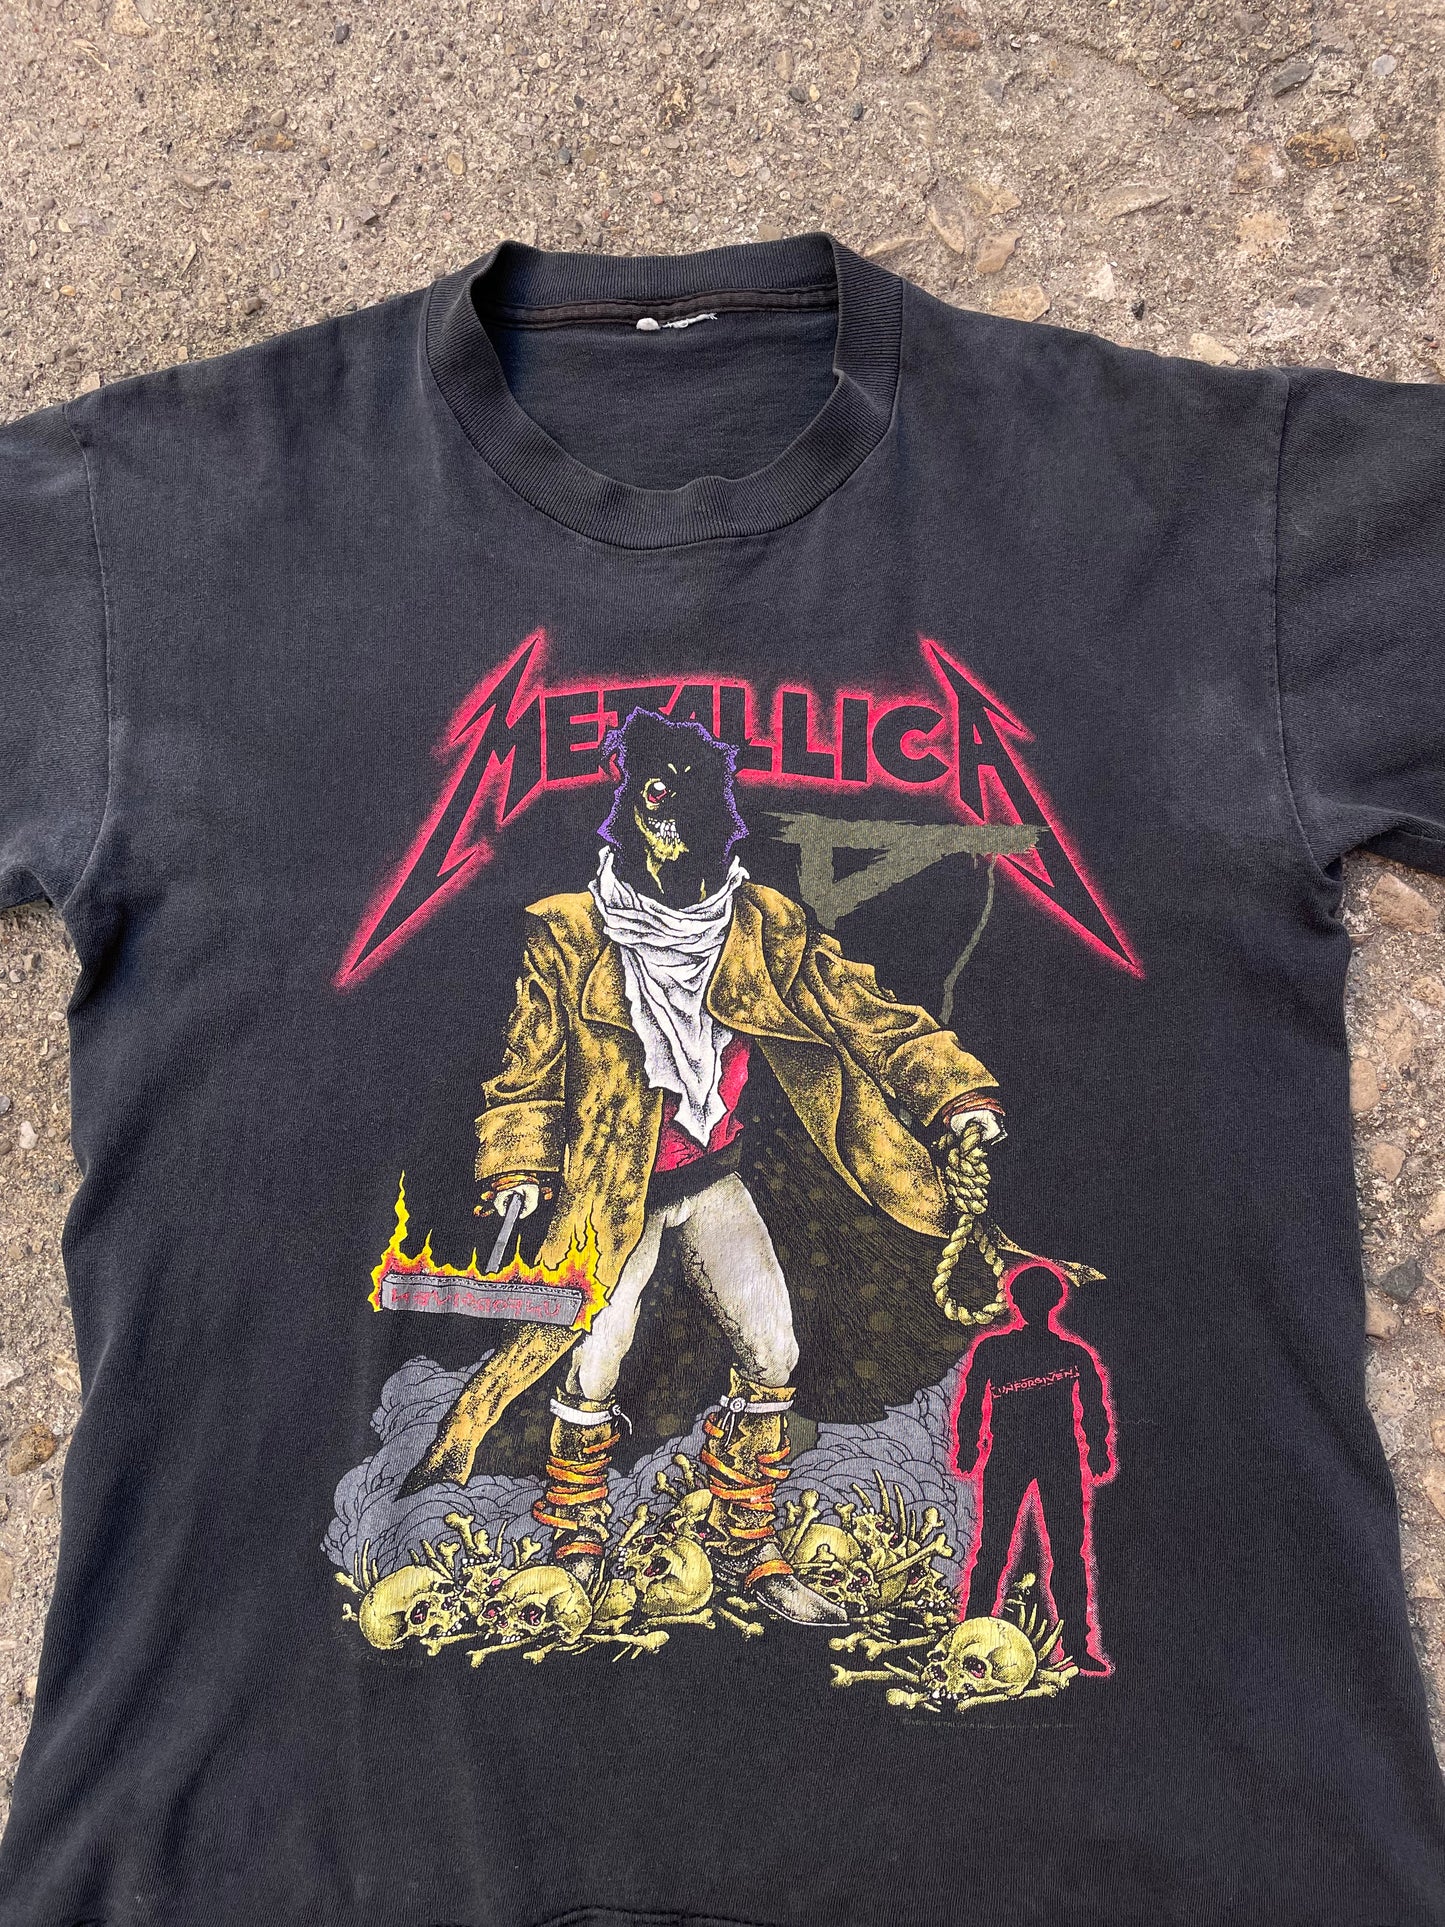 1990's Metallica The Unforgiven Band T-Shirt - L